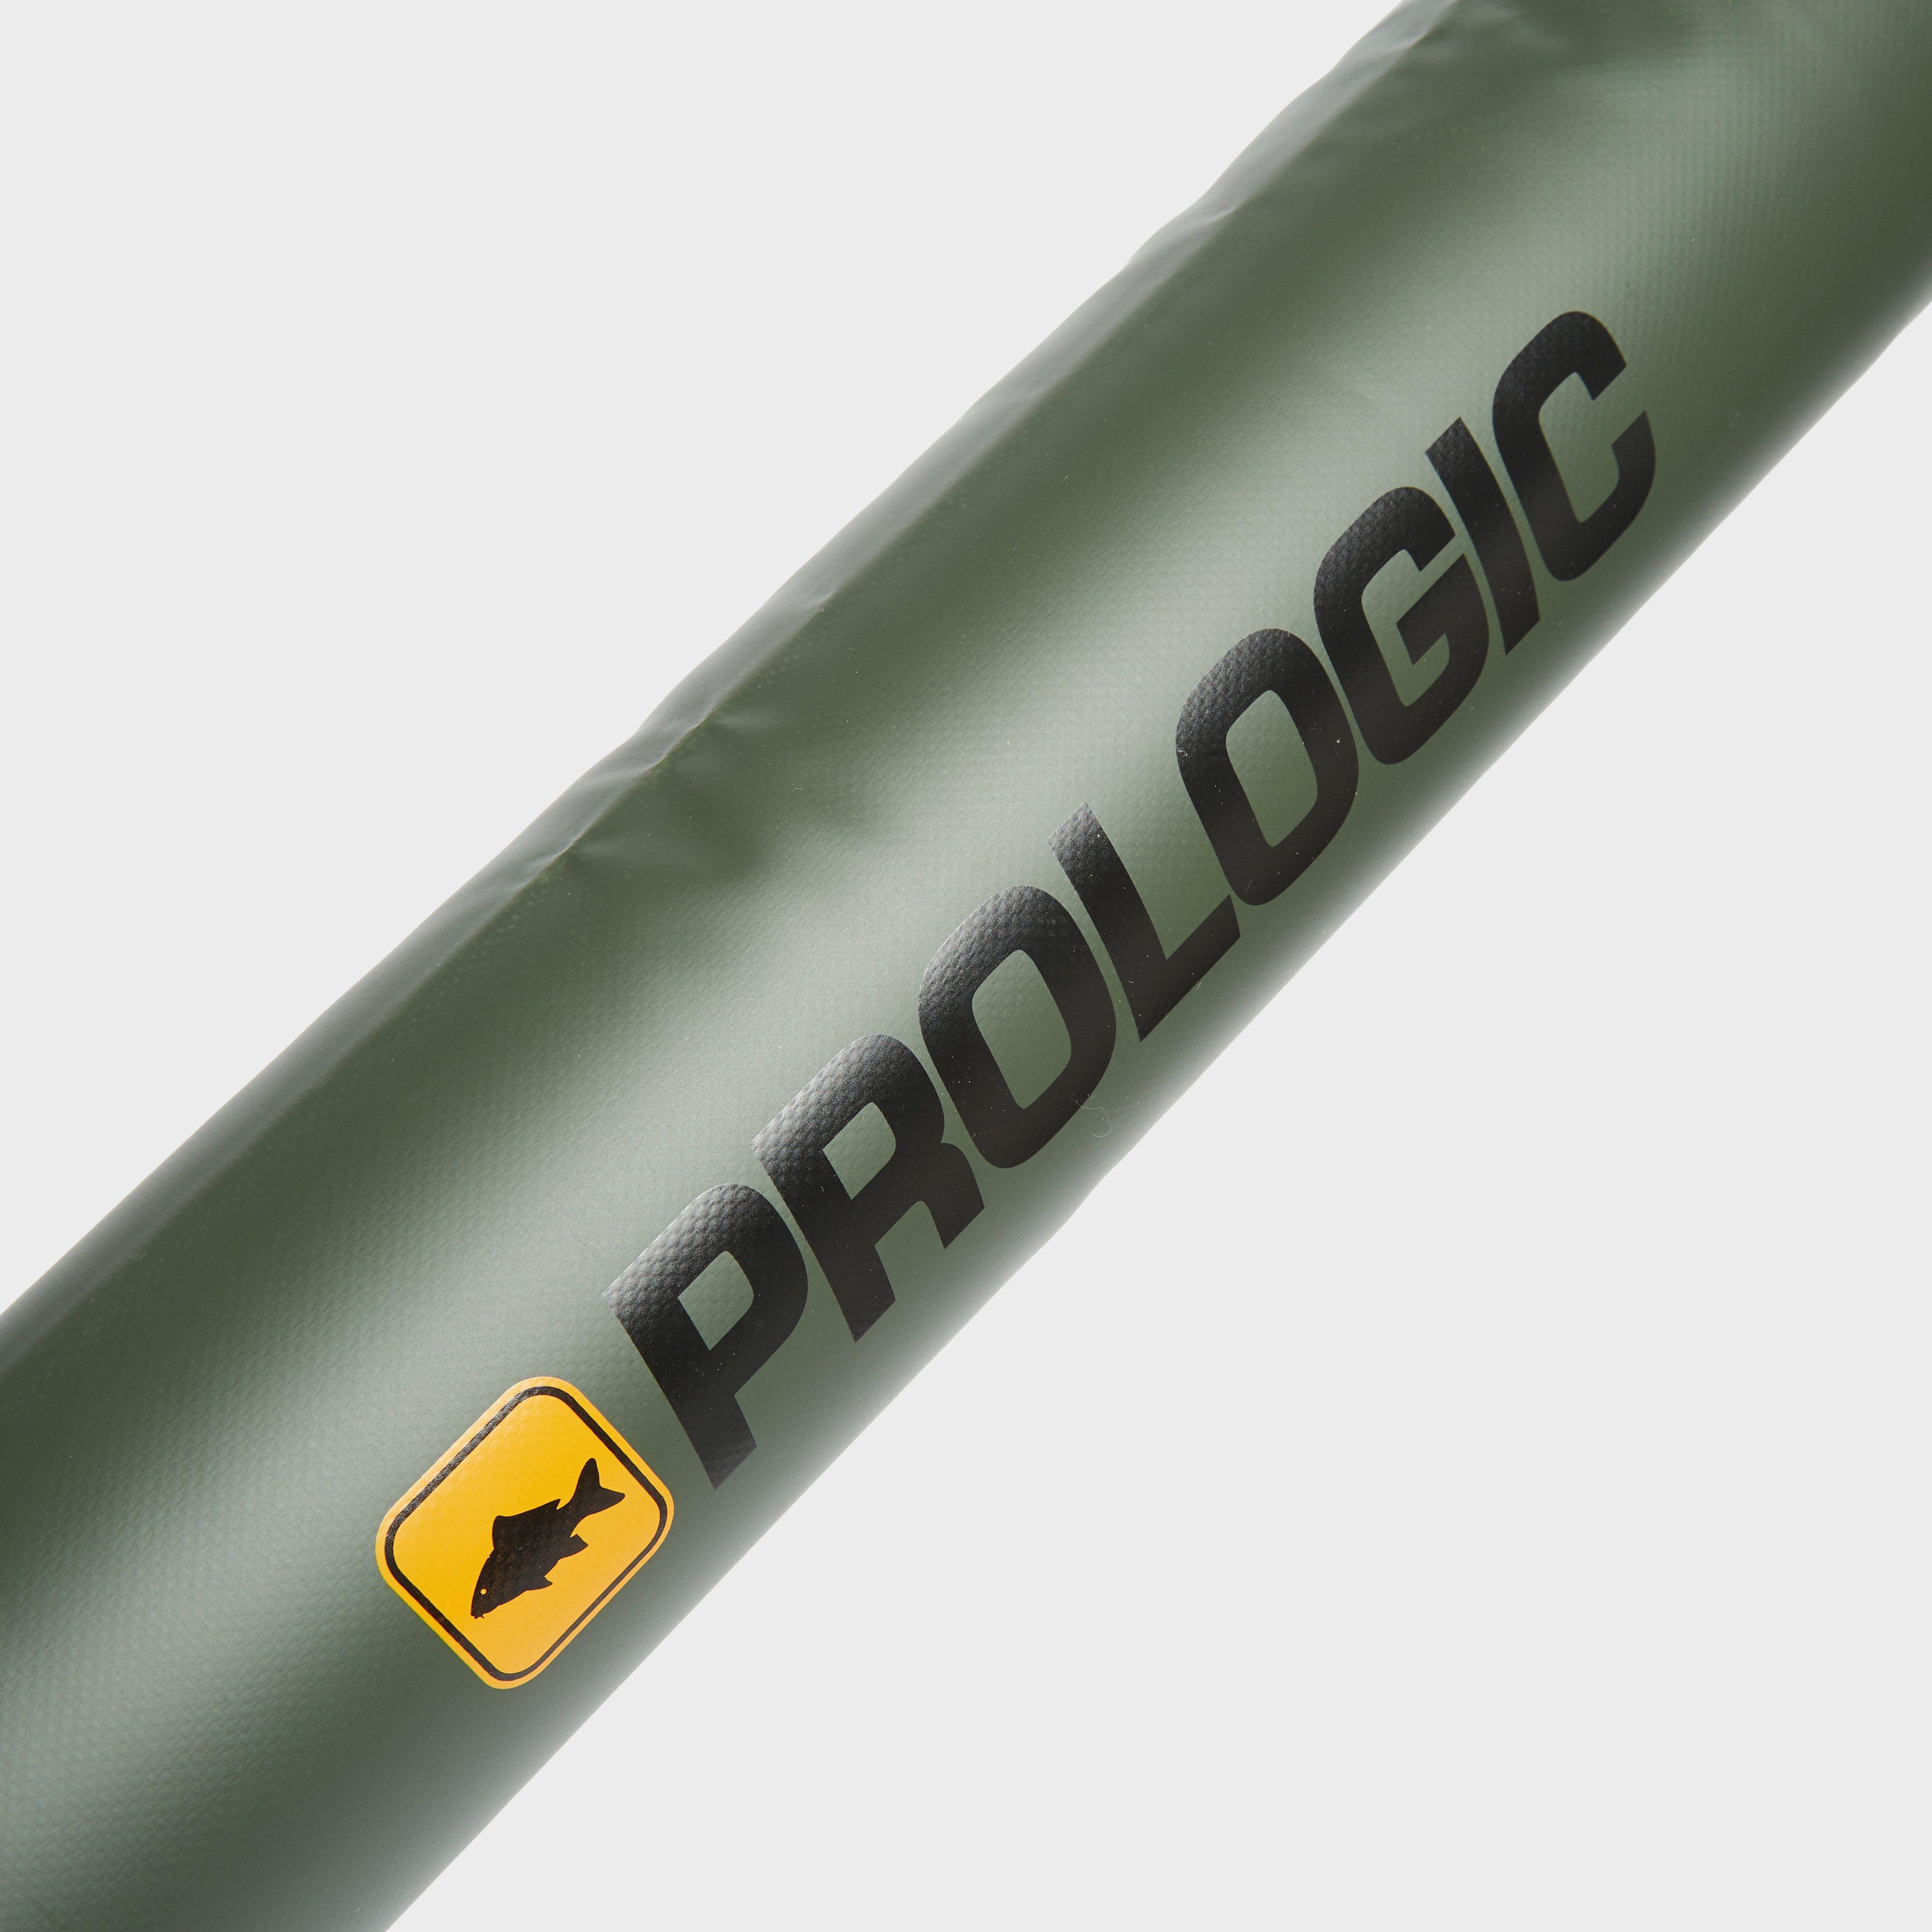 Prologic Waterproof Stink Bag Review